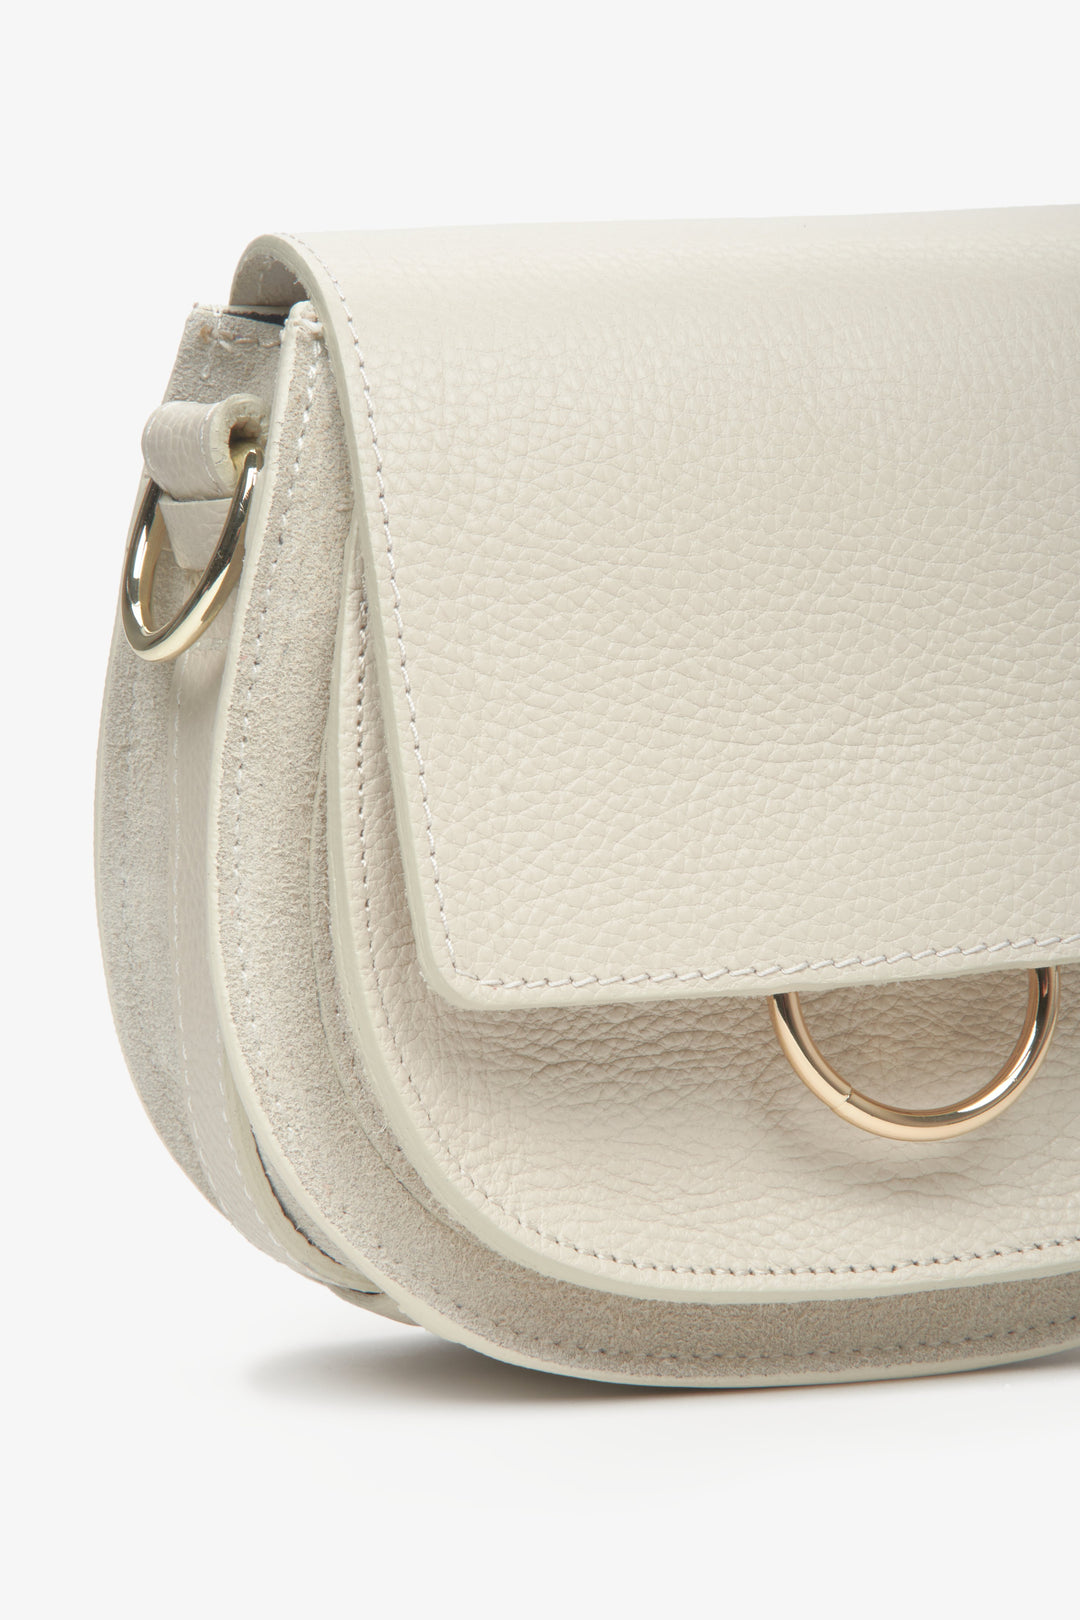 Small Italian leather light beige crossbody women's bag.